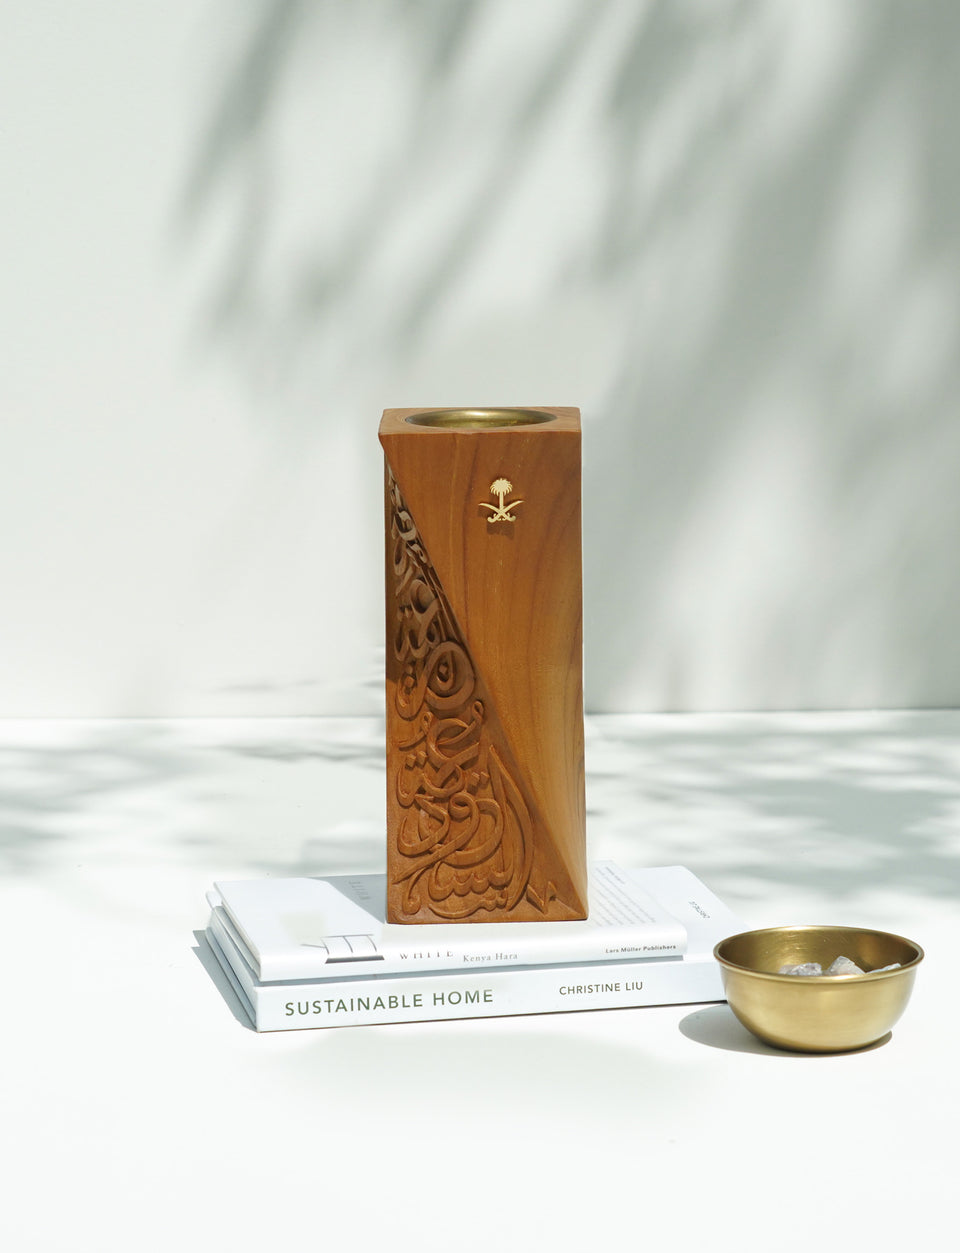 Concept 05 - Incense Burner - The Kingdom of Saudi Arabia